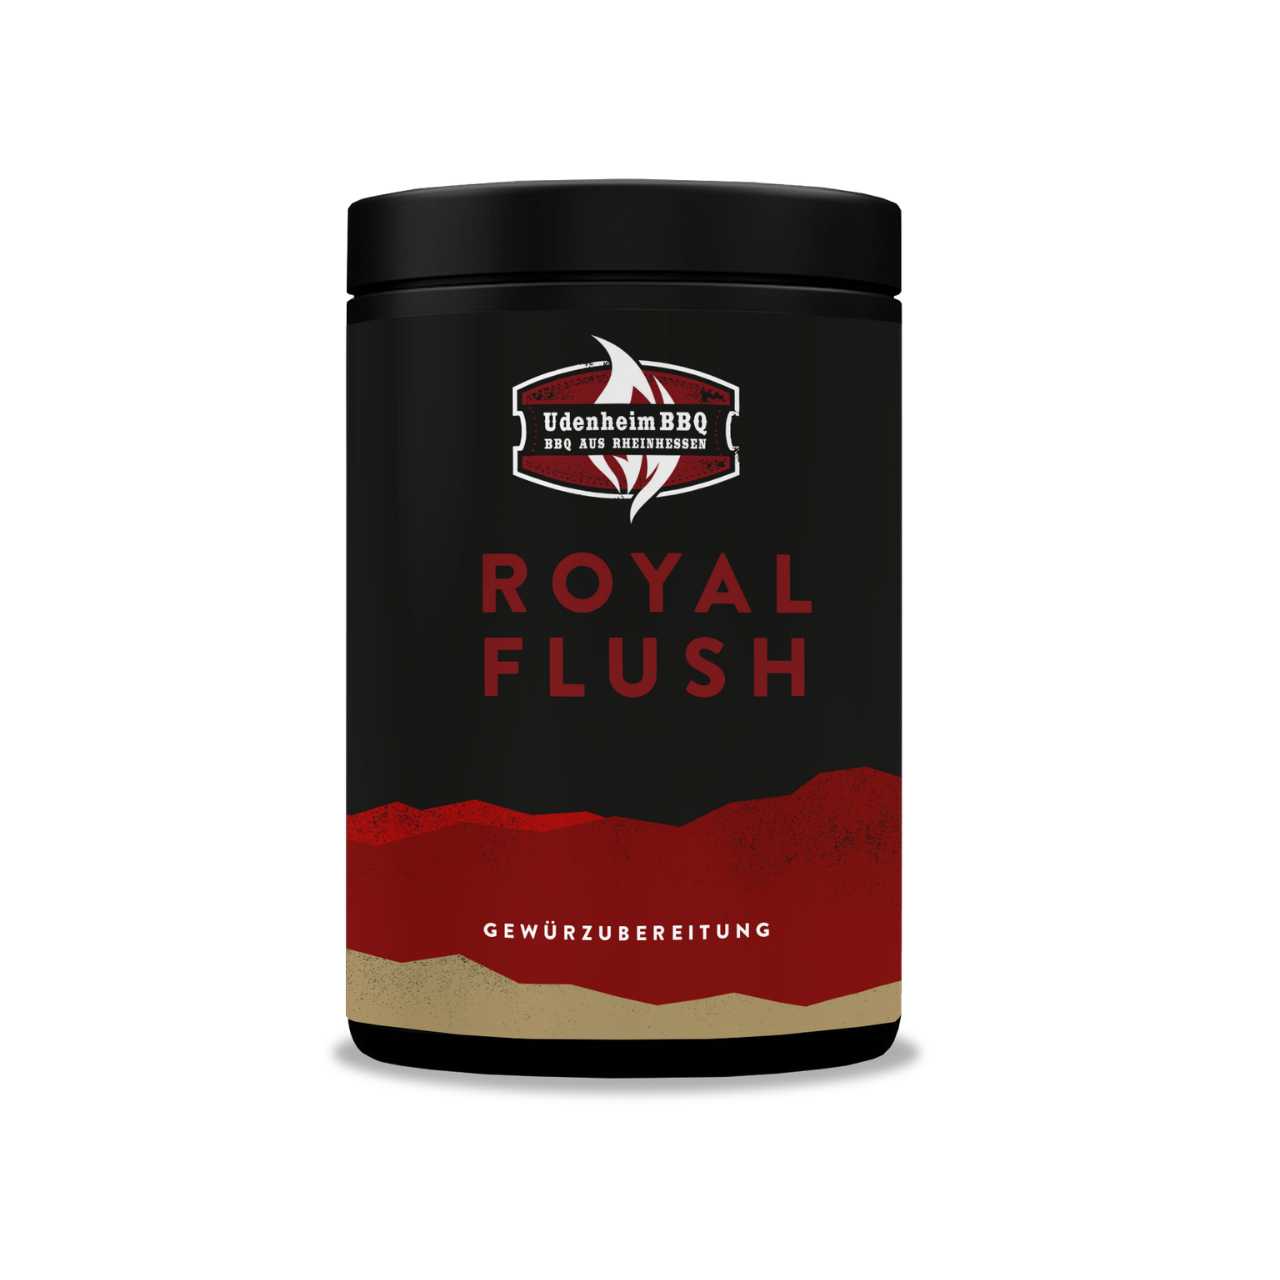 Udenheim BBQ - Royal Flush Rub 350 g Streuer